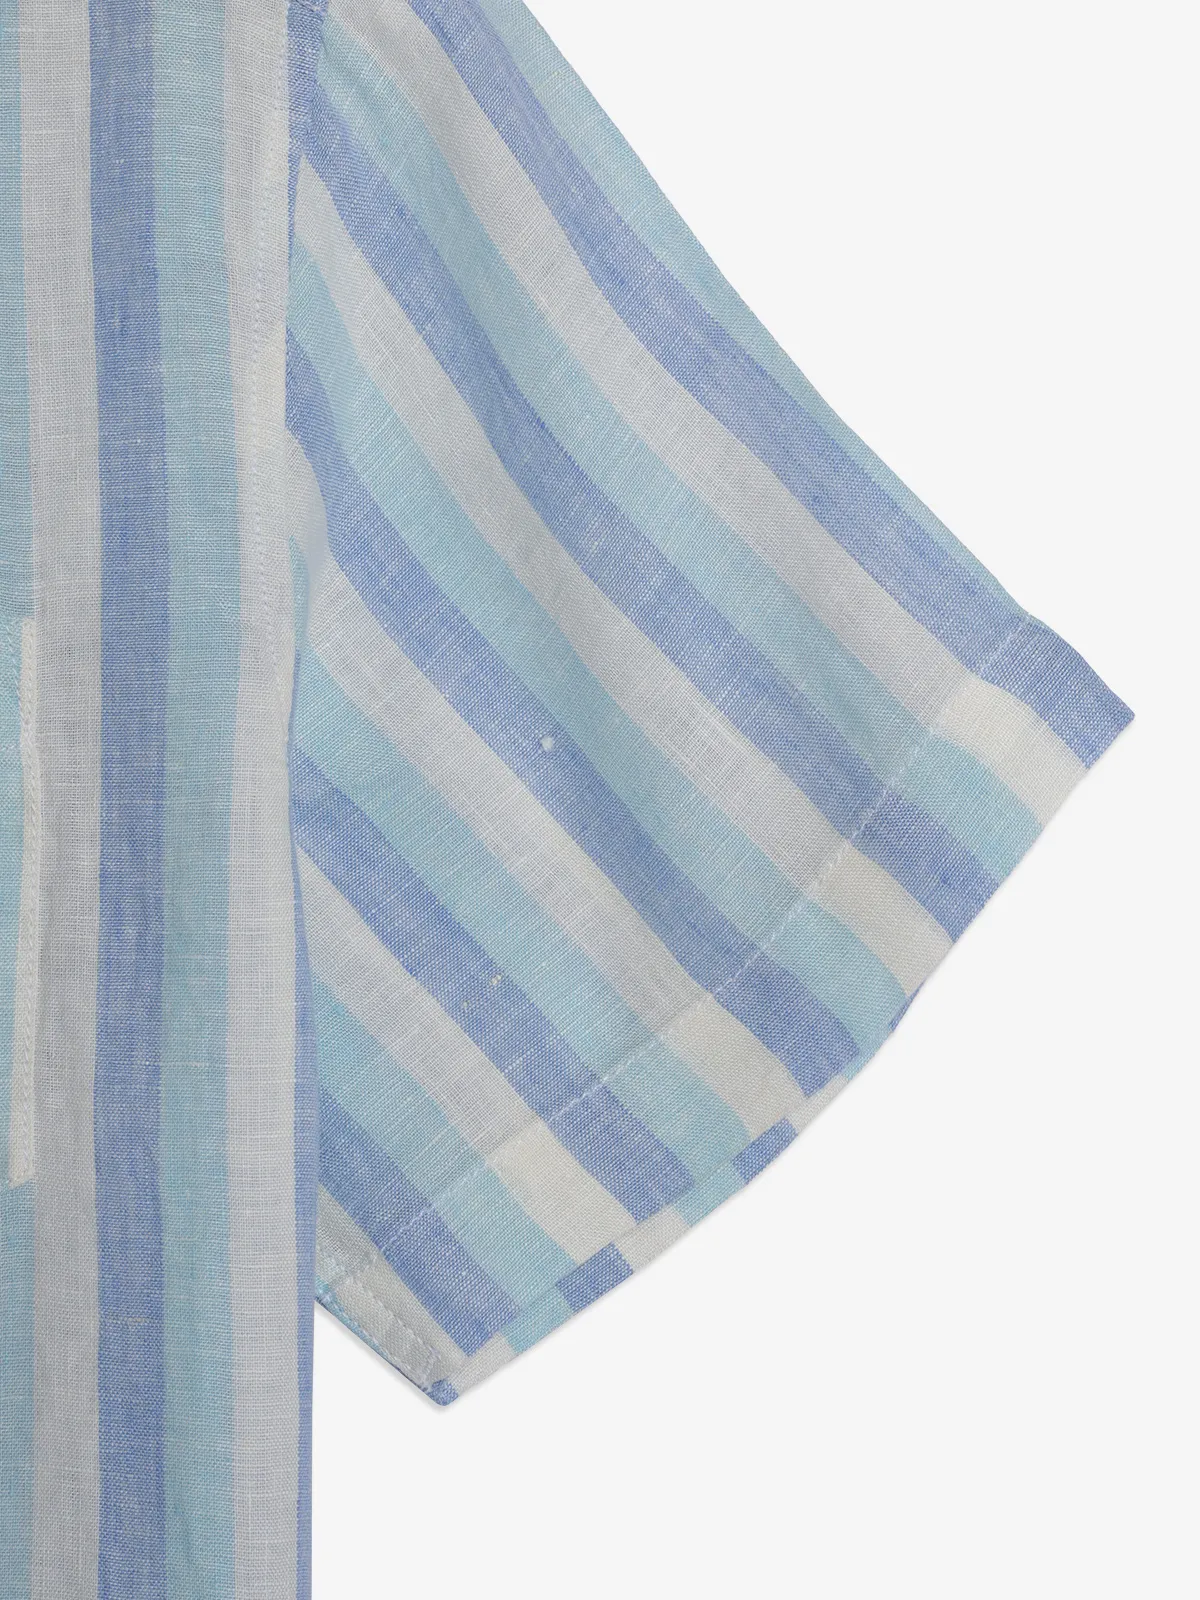 PEPE JEANS light blue stripe cotton shirt